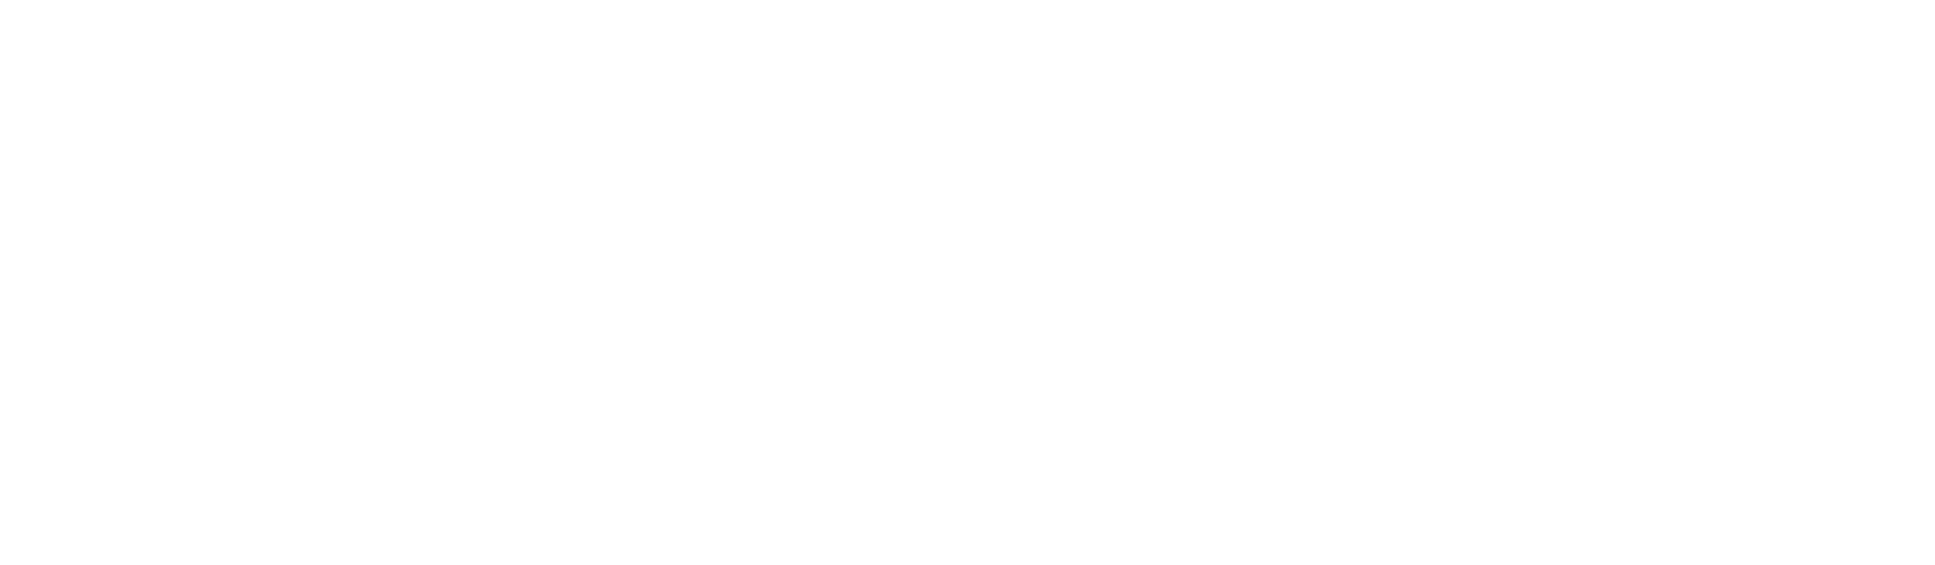 baloo logo